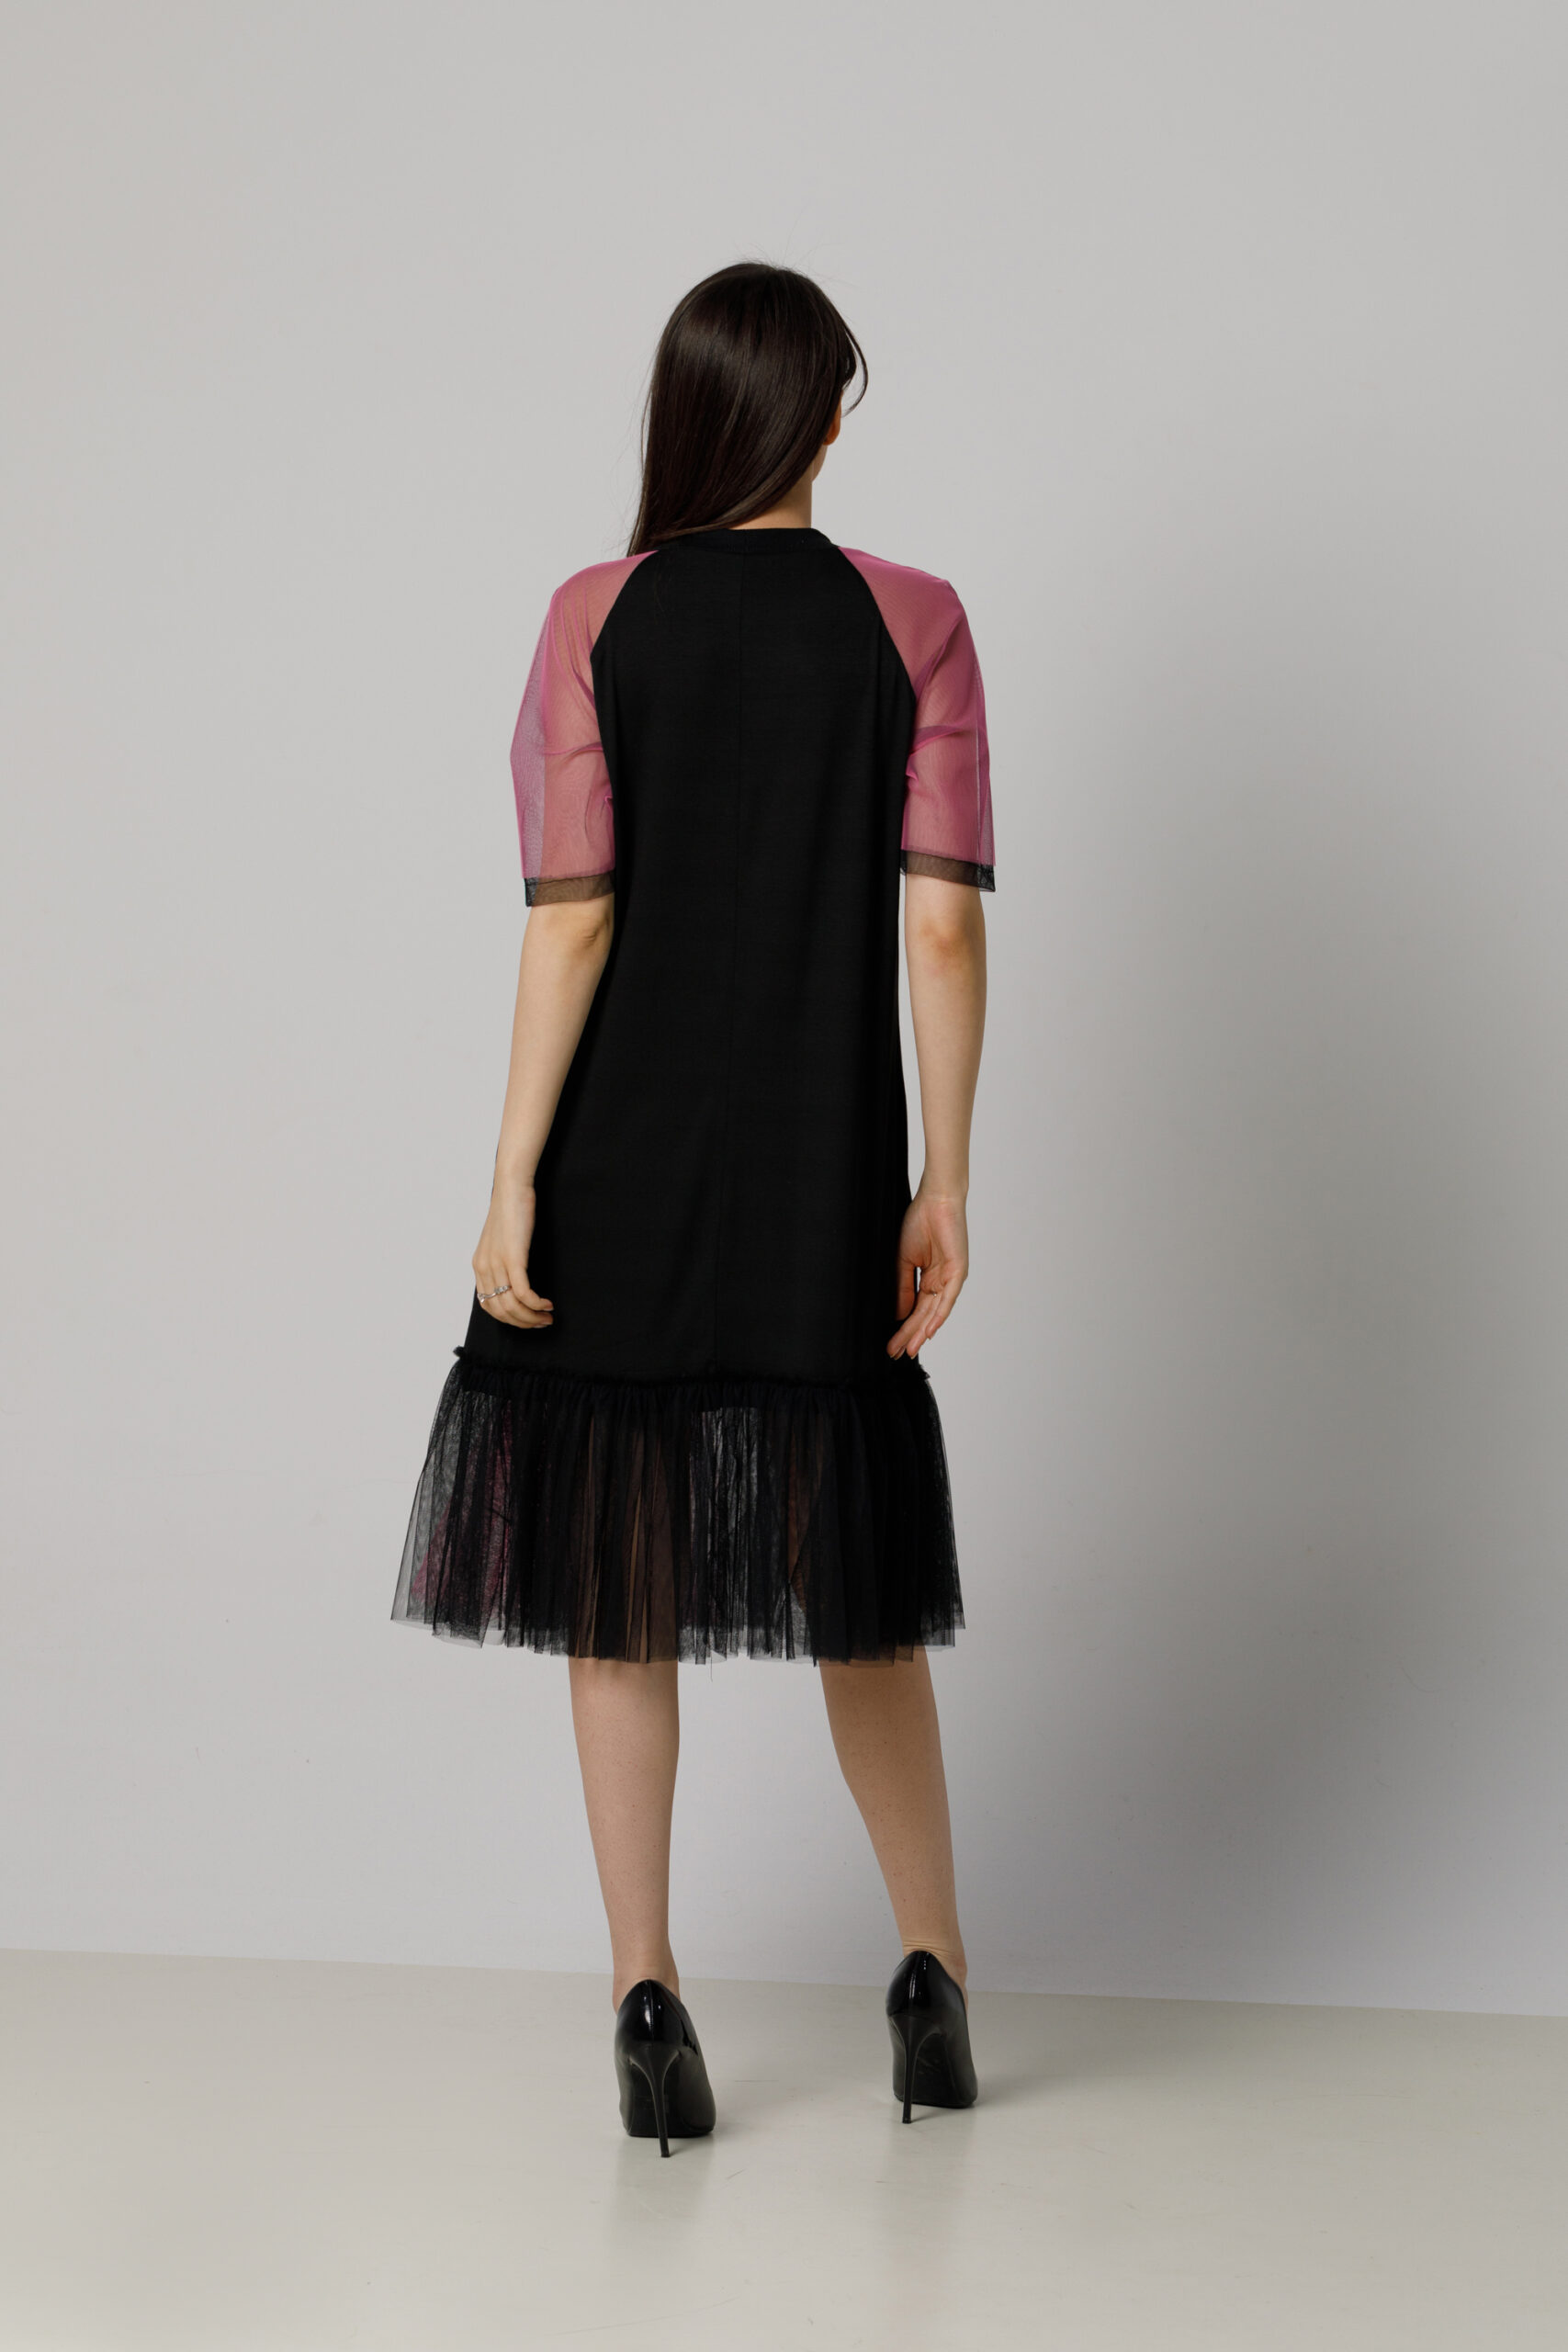 AVIVA casual dress with tulle ruffle. Natural fabrics, original design, handmade embroidery